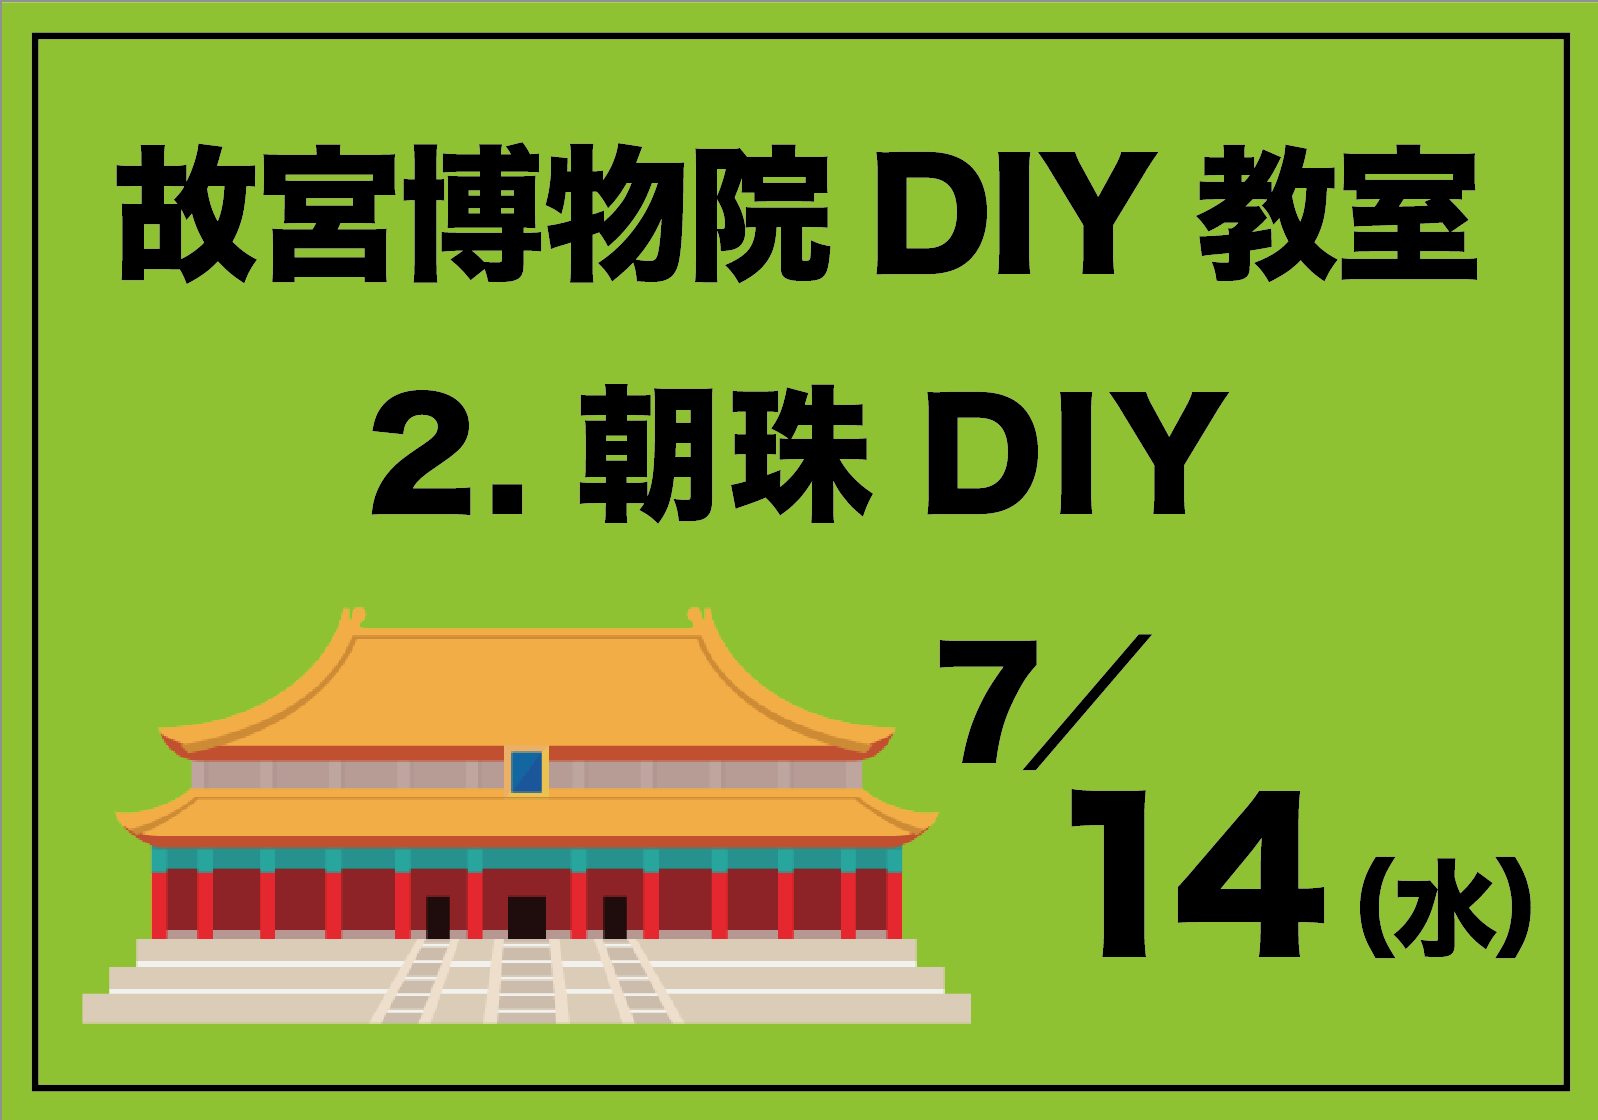 故宮博物院DIY教室「2.朝珠DIY」7月14日